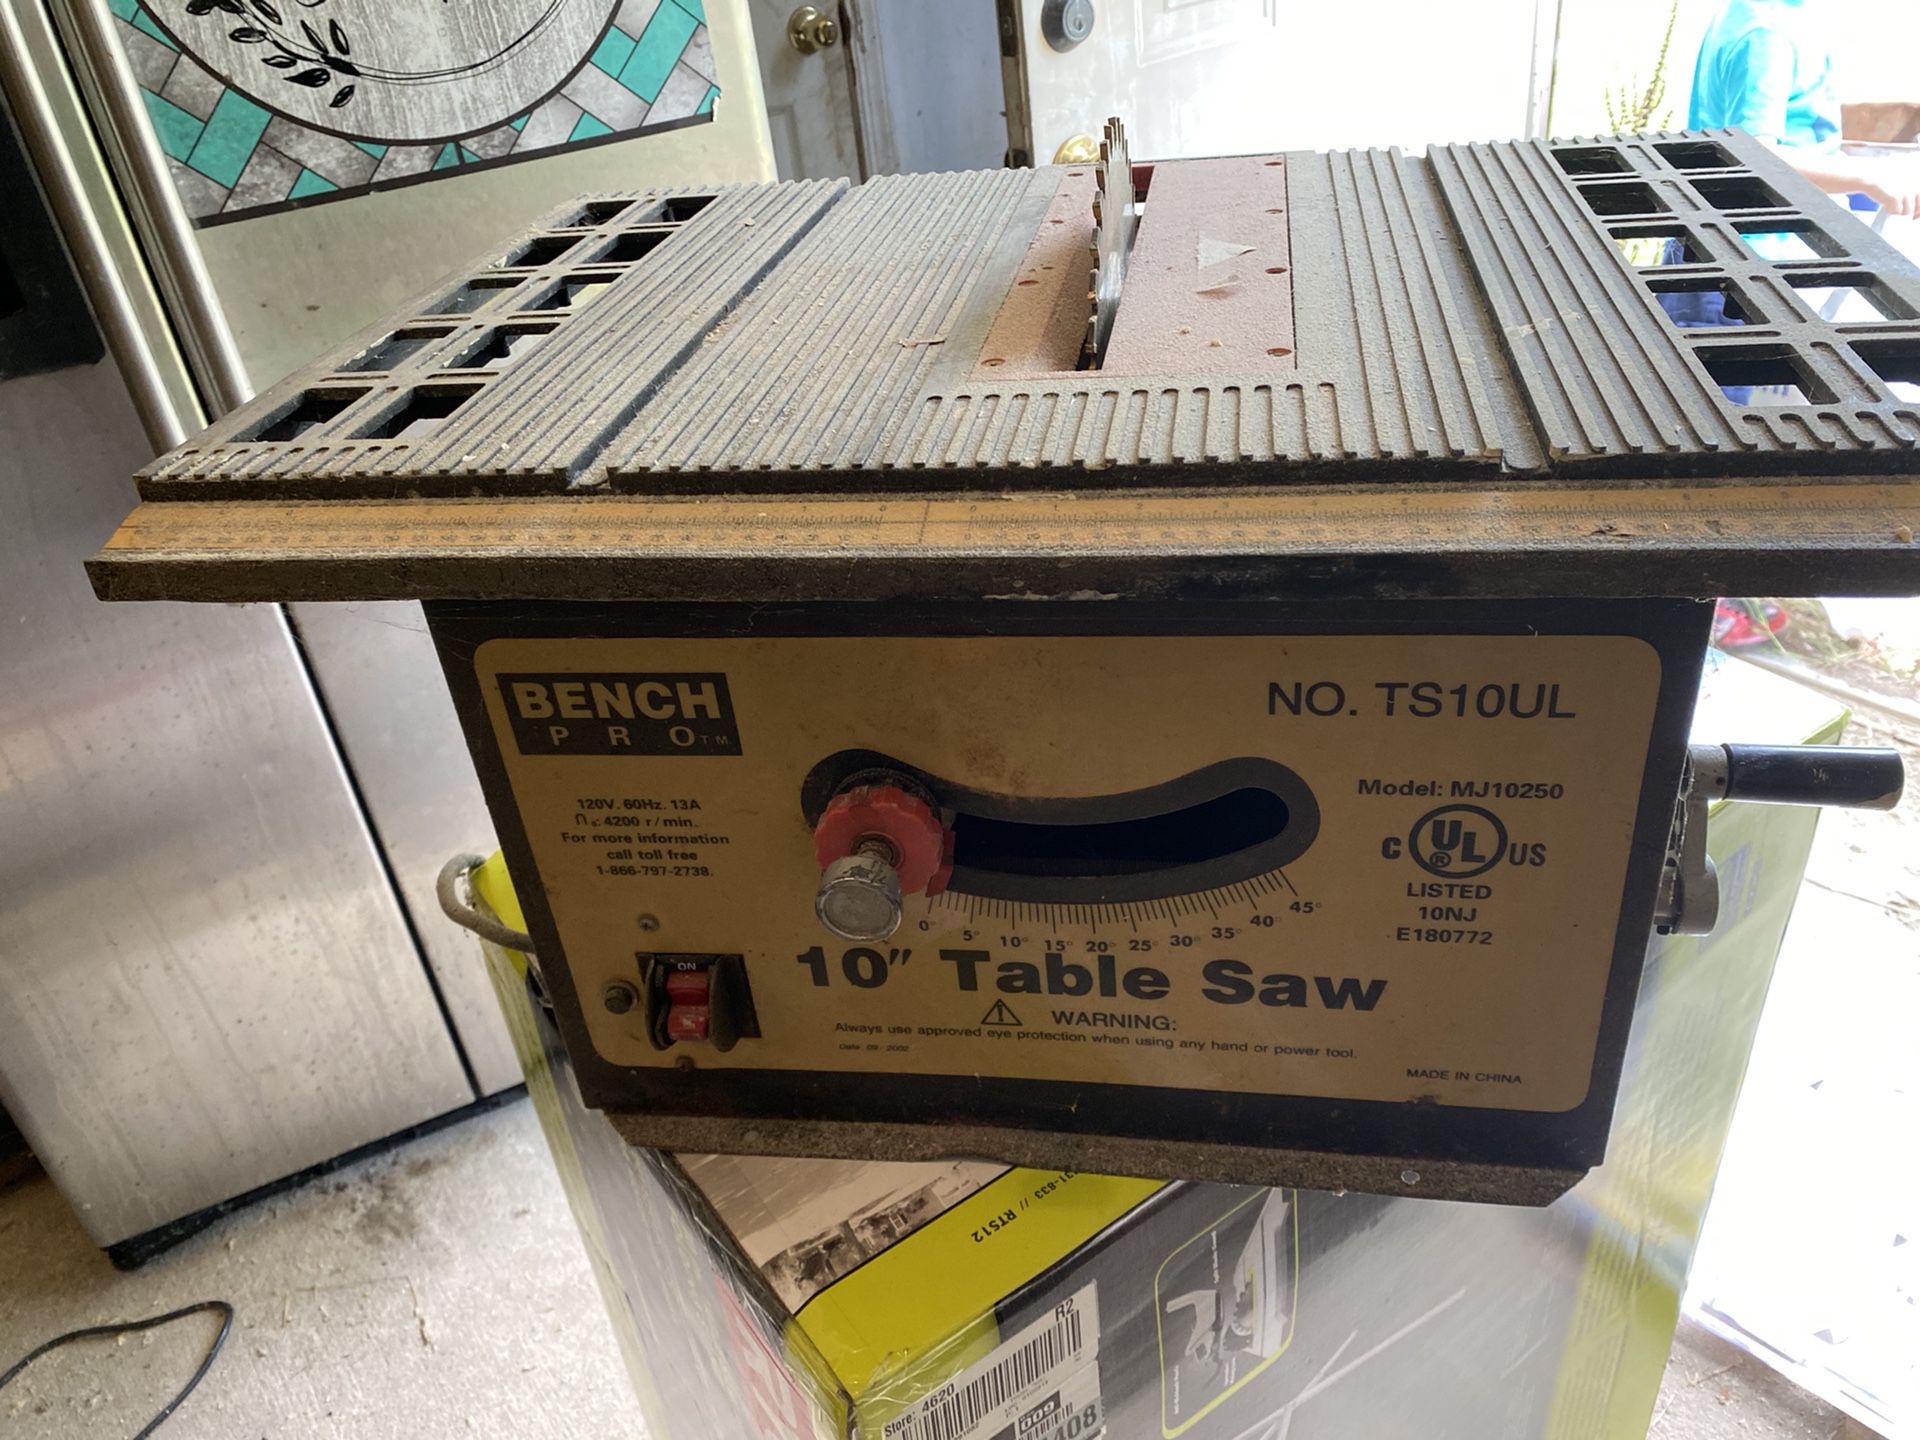 10” Table Saw